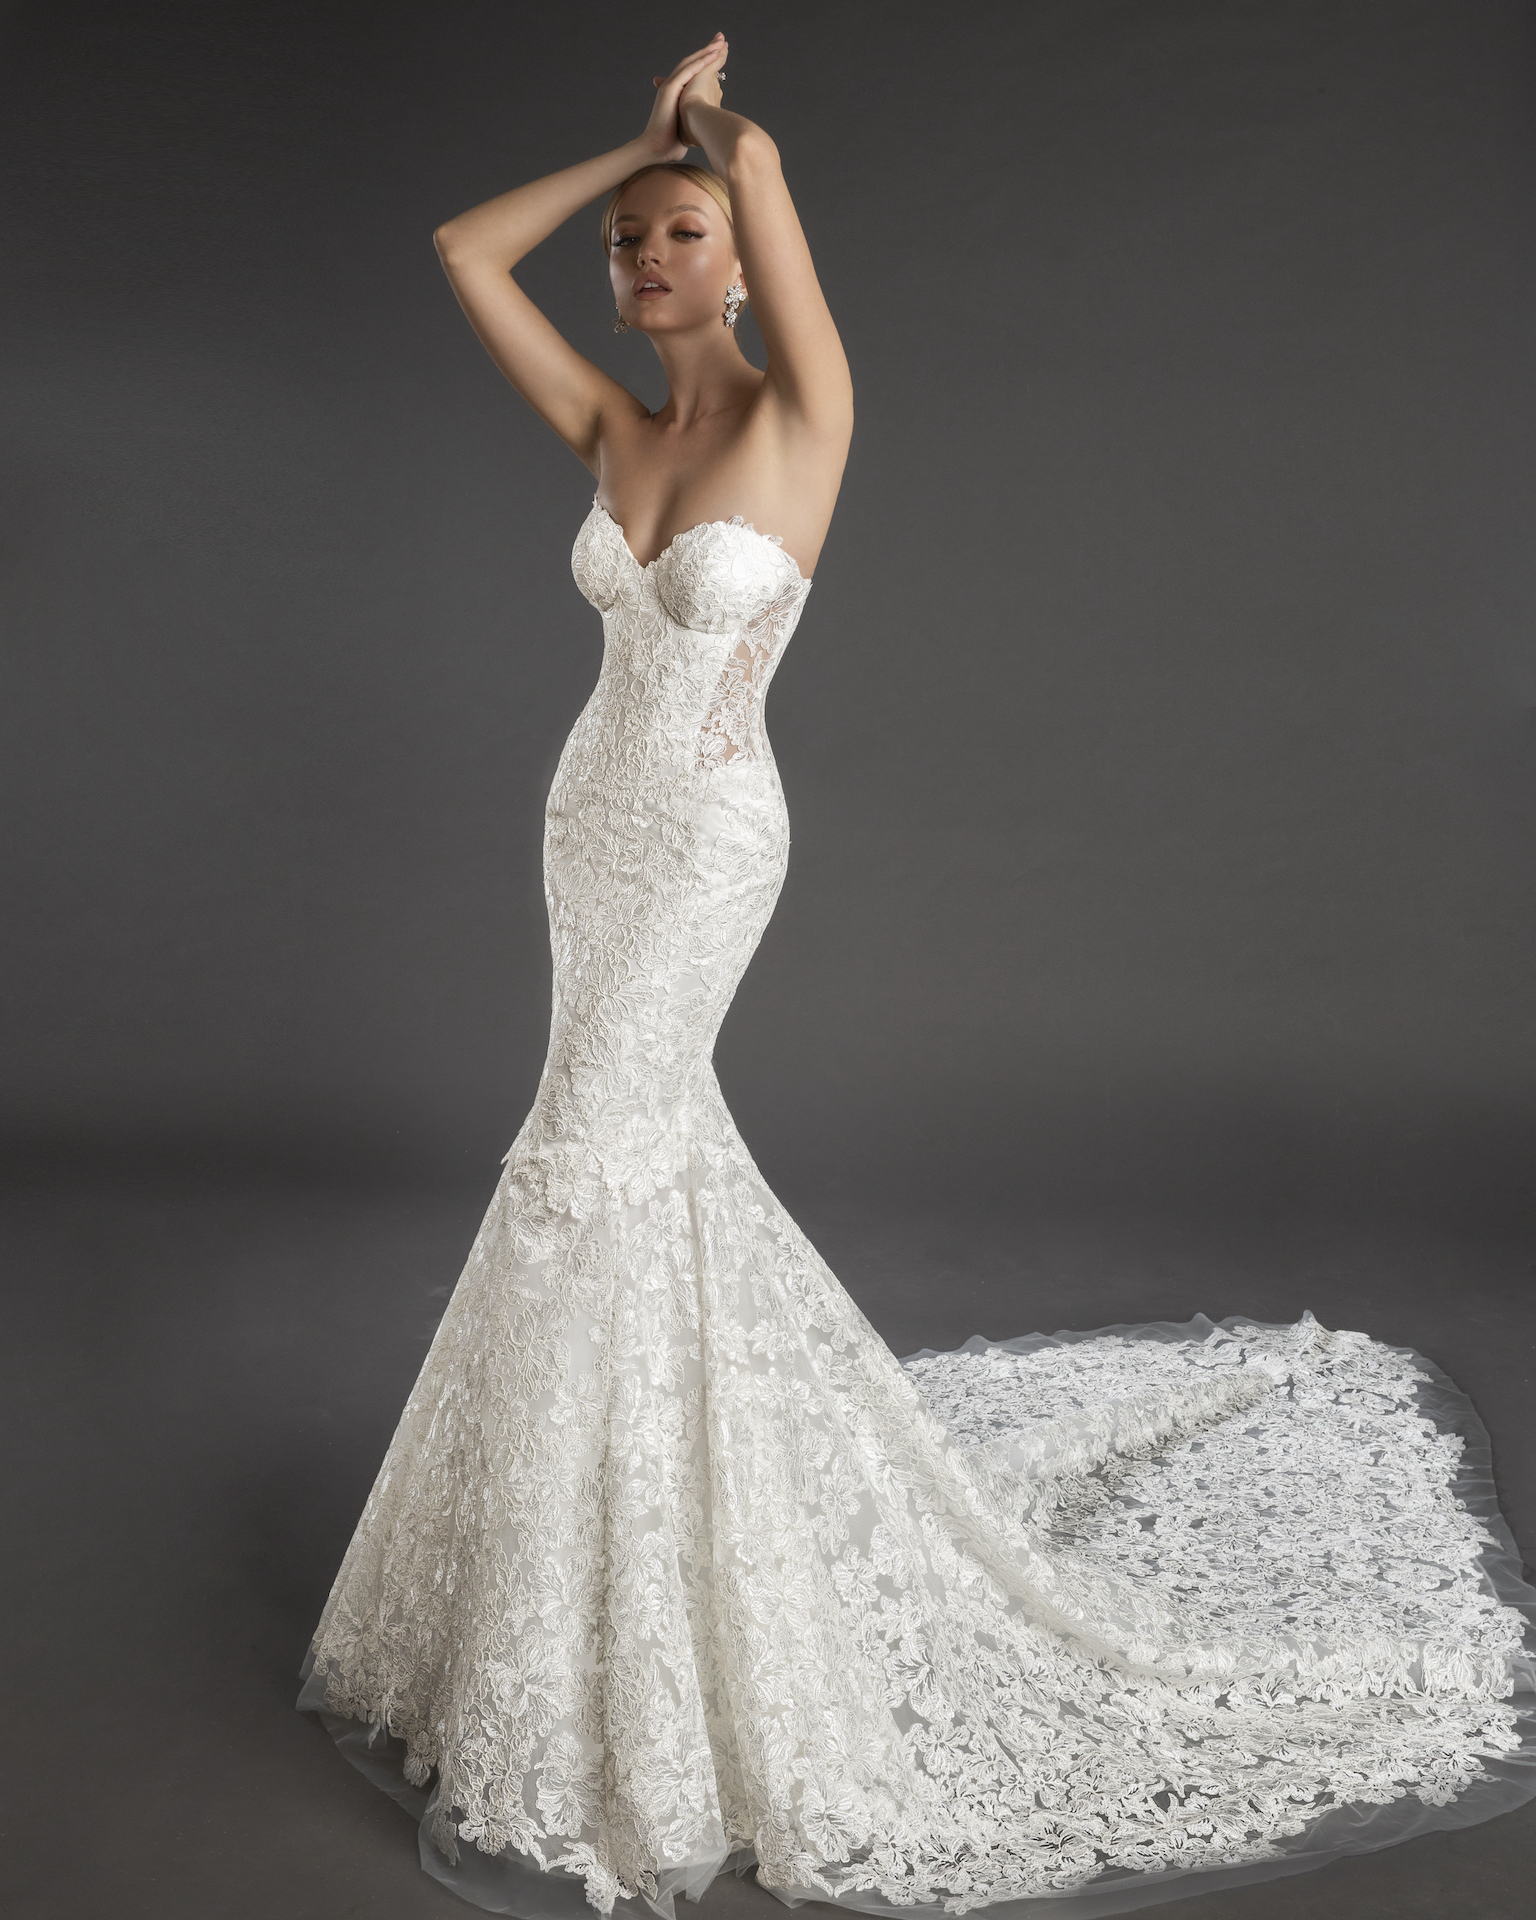 Strapless Sweetheart Neckline Lace Mermaid Wedding Dress Kleinfeld Bridal 9367